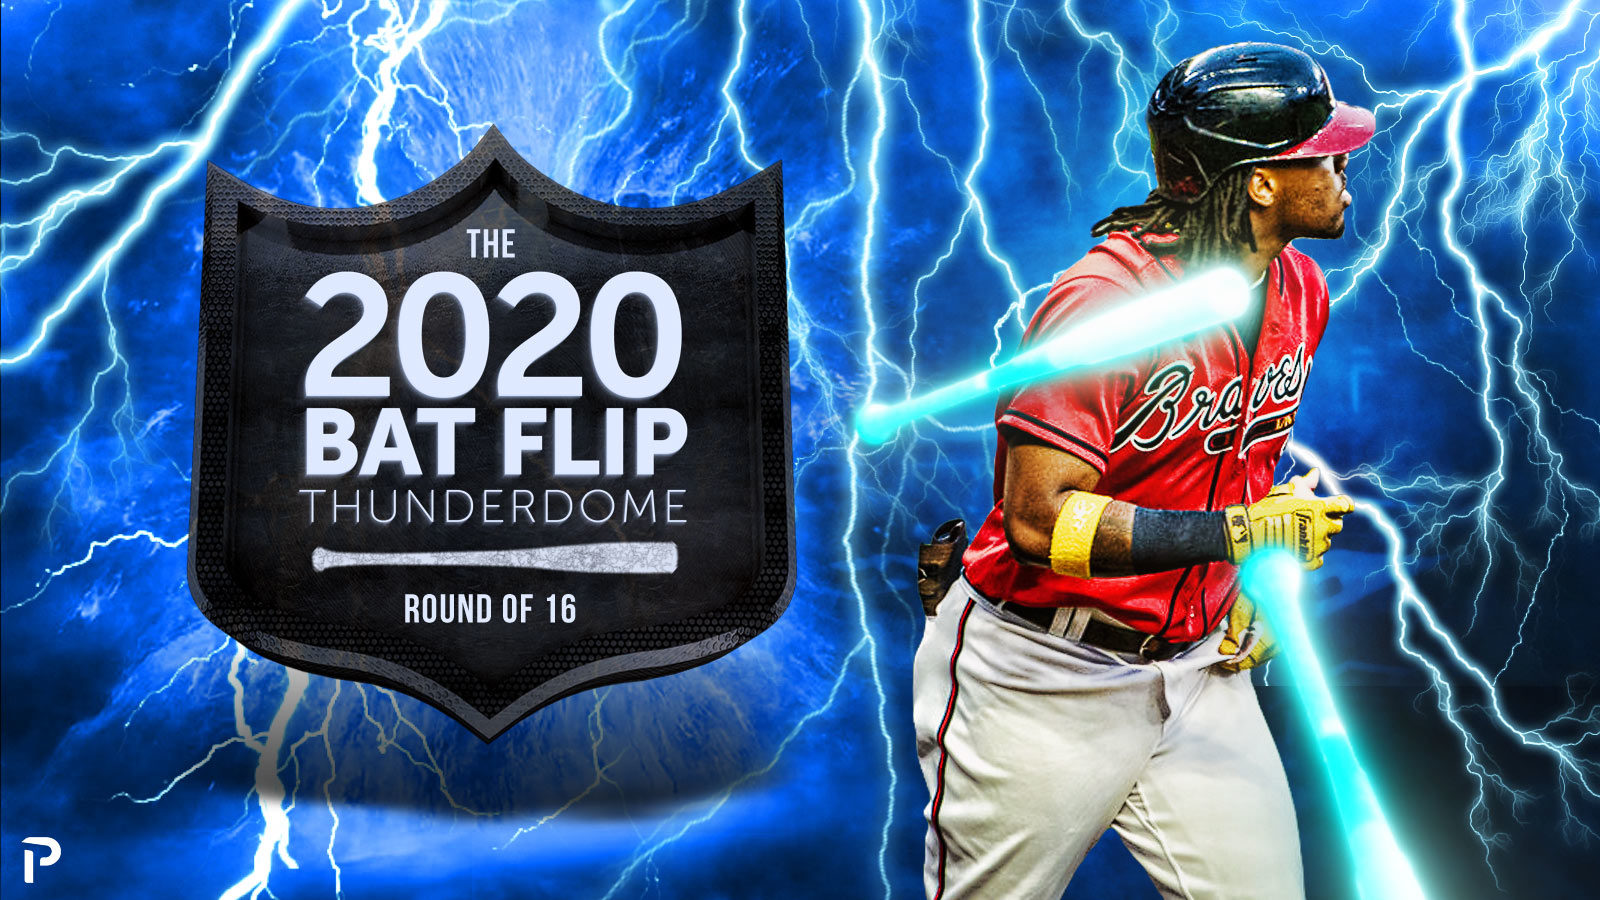 The 2020 Bat Flip THUNDERDOME!